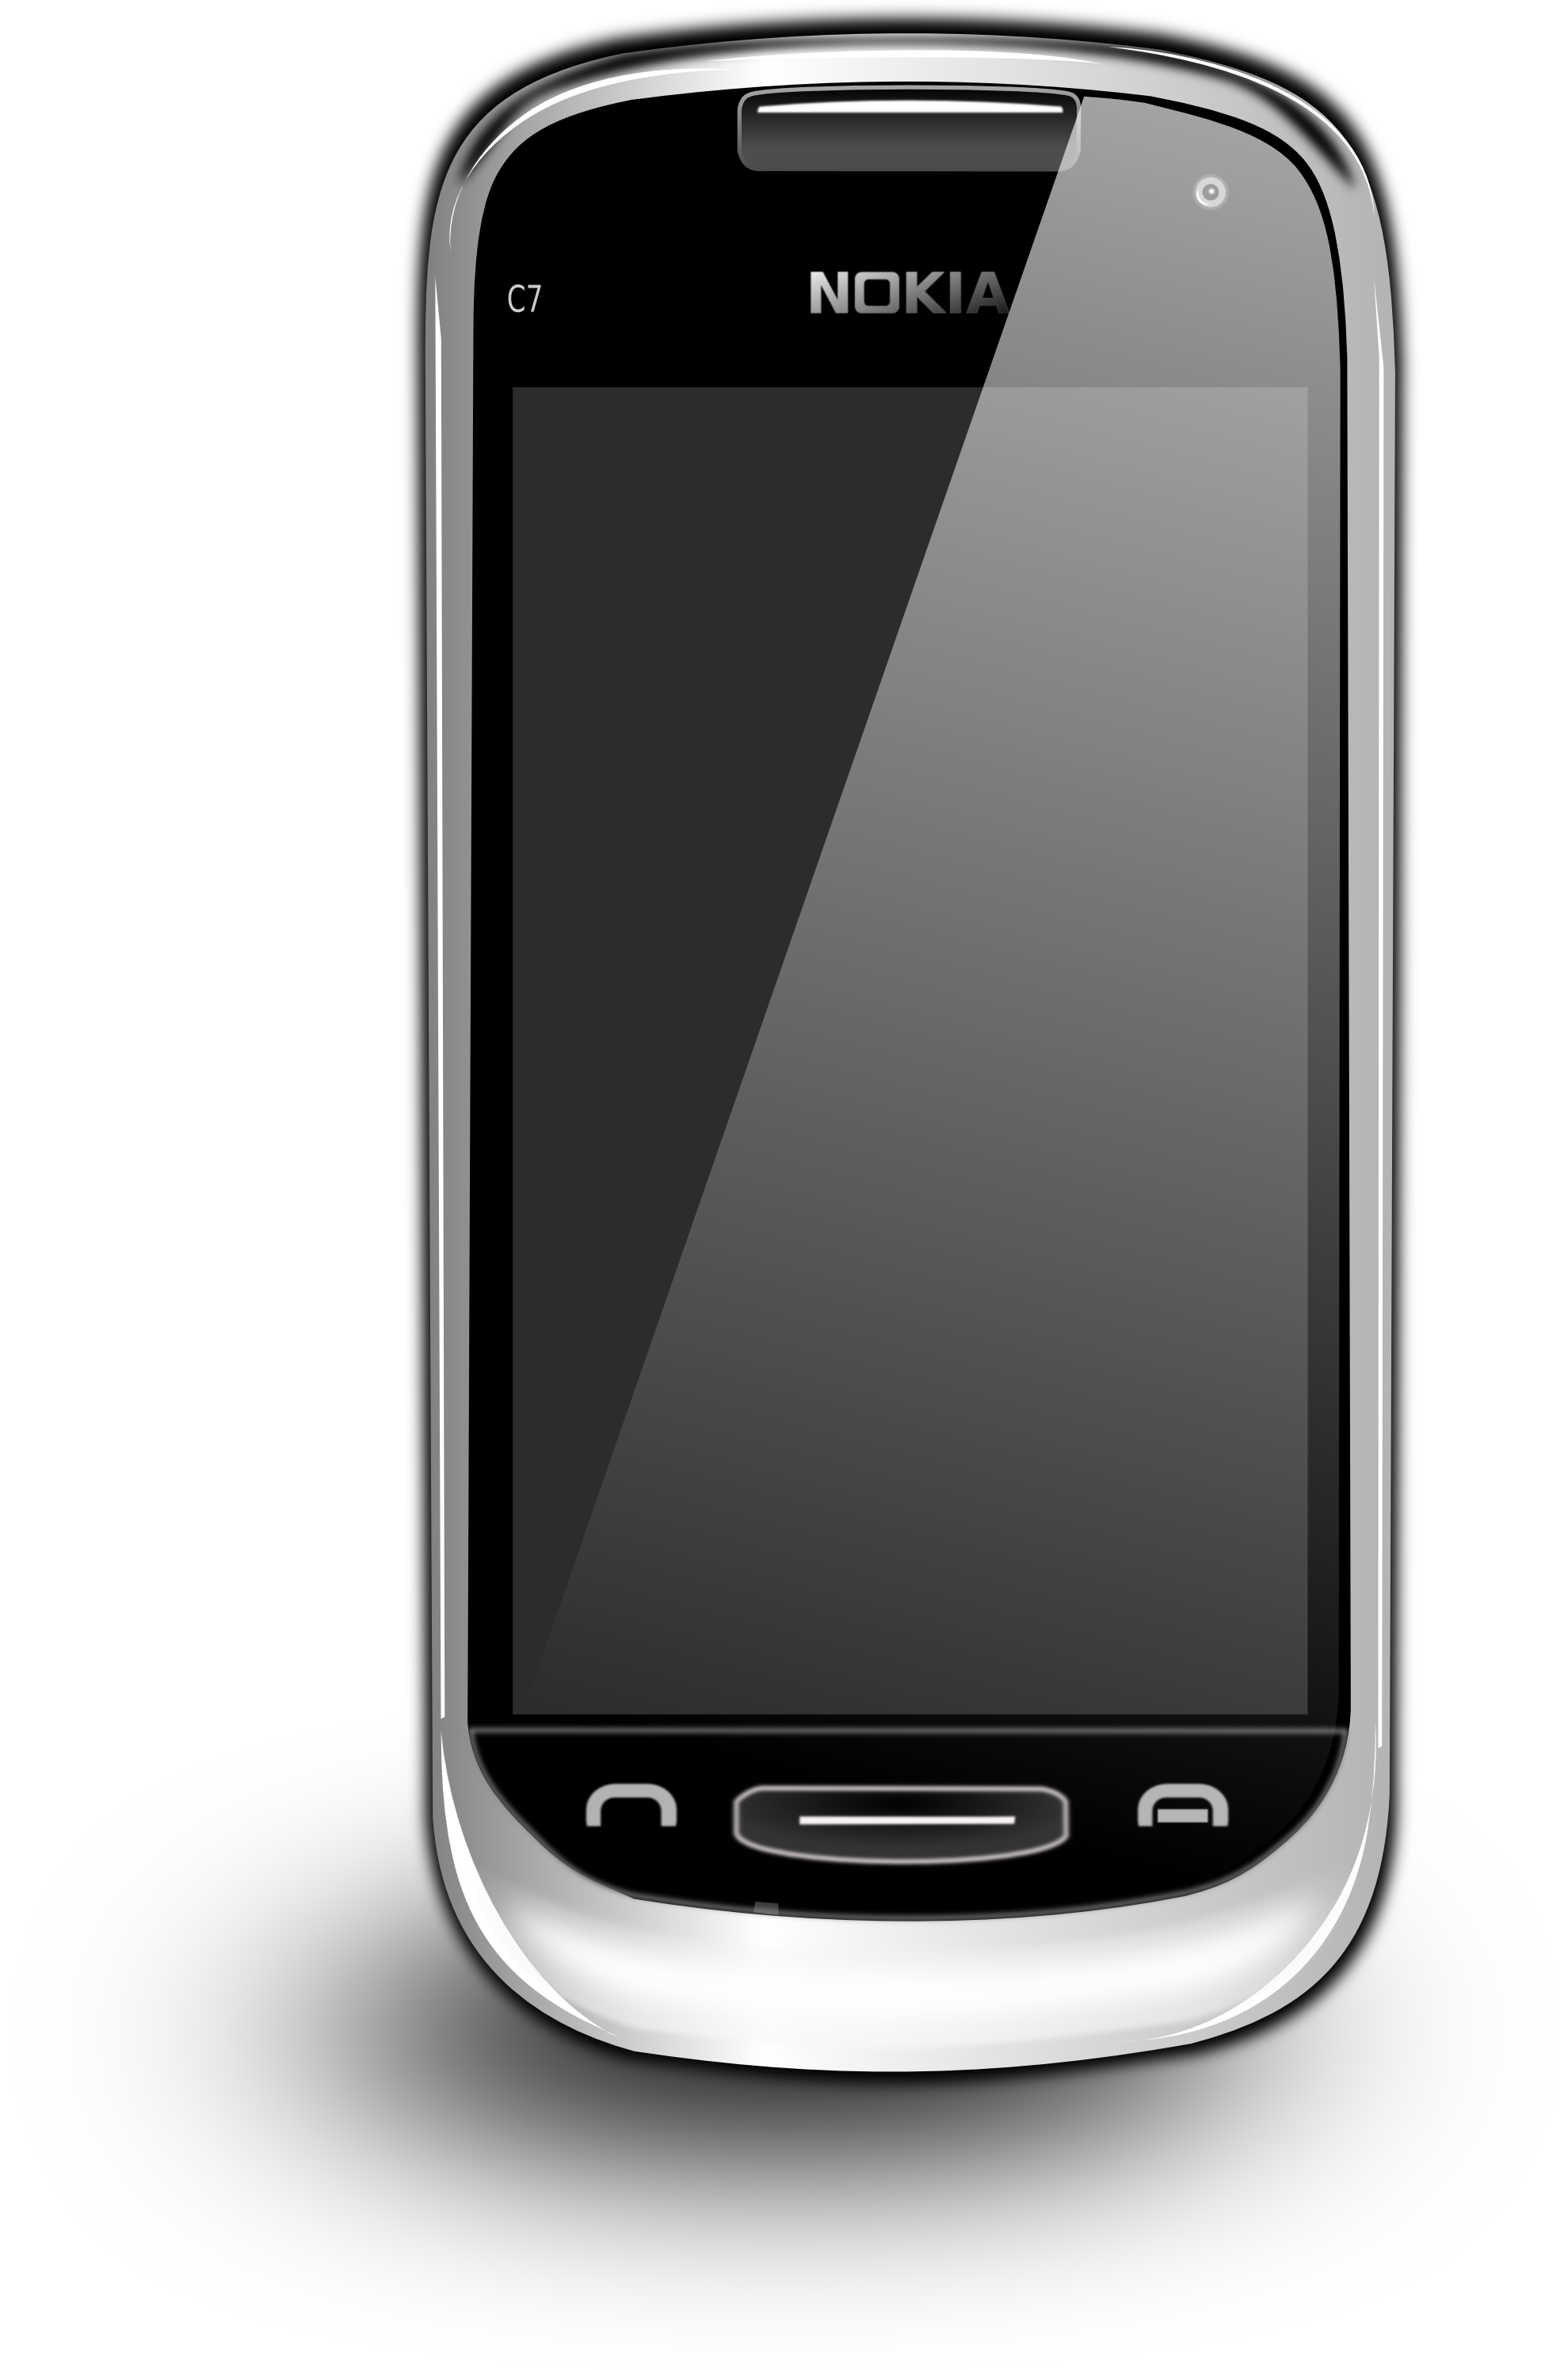 Clip Art » nokia C7 phone icon Android